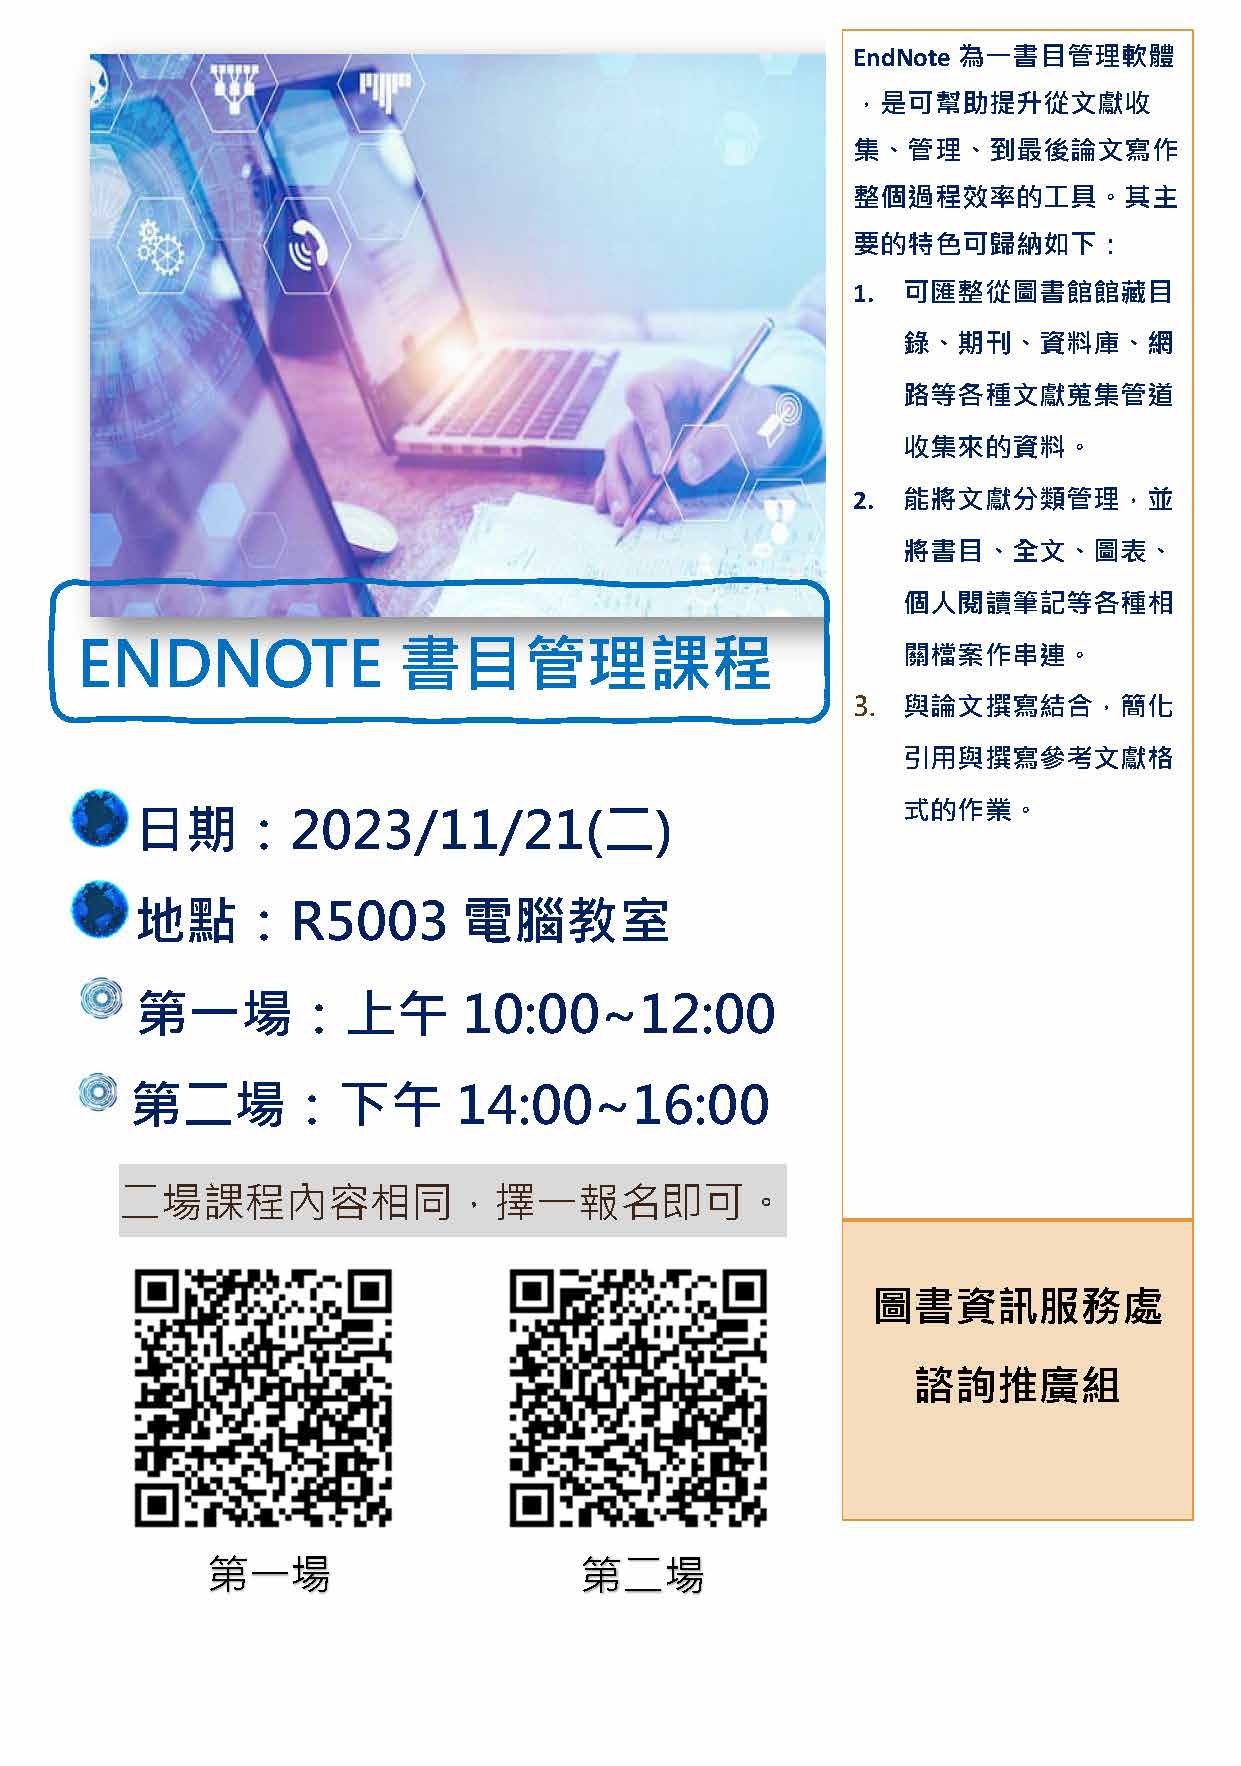 20230918 endnote